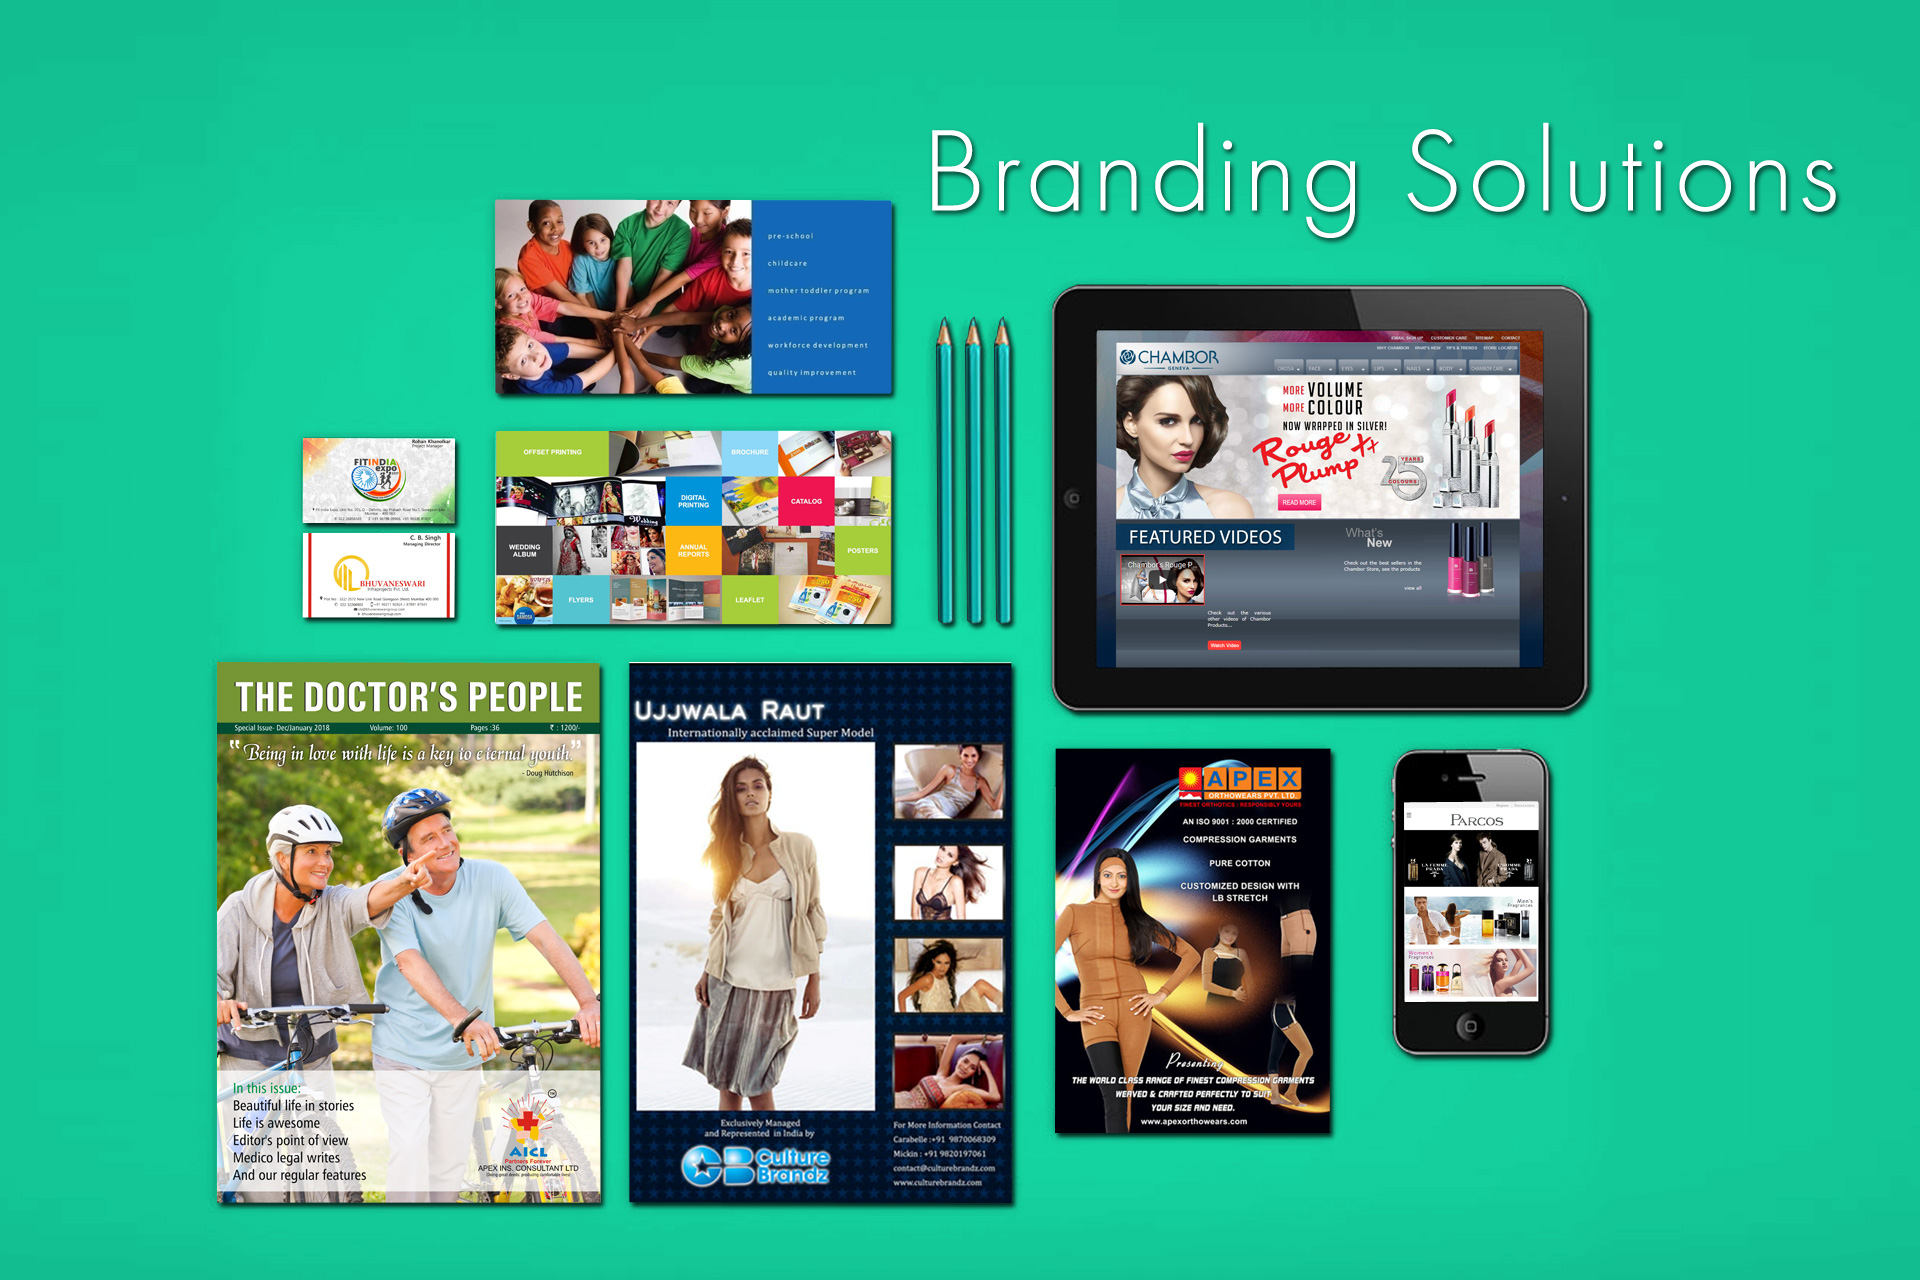 Design Accent India Branding Solutions